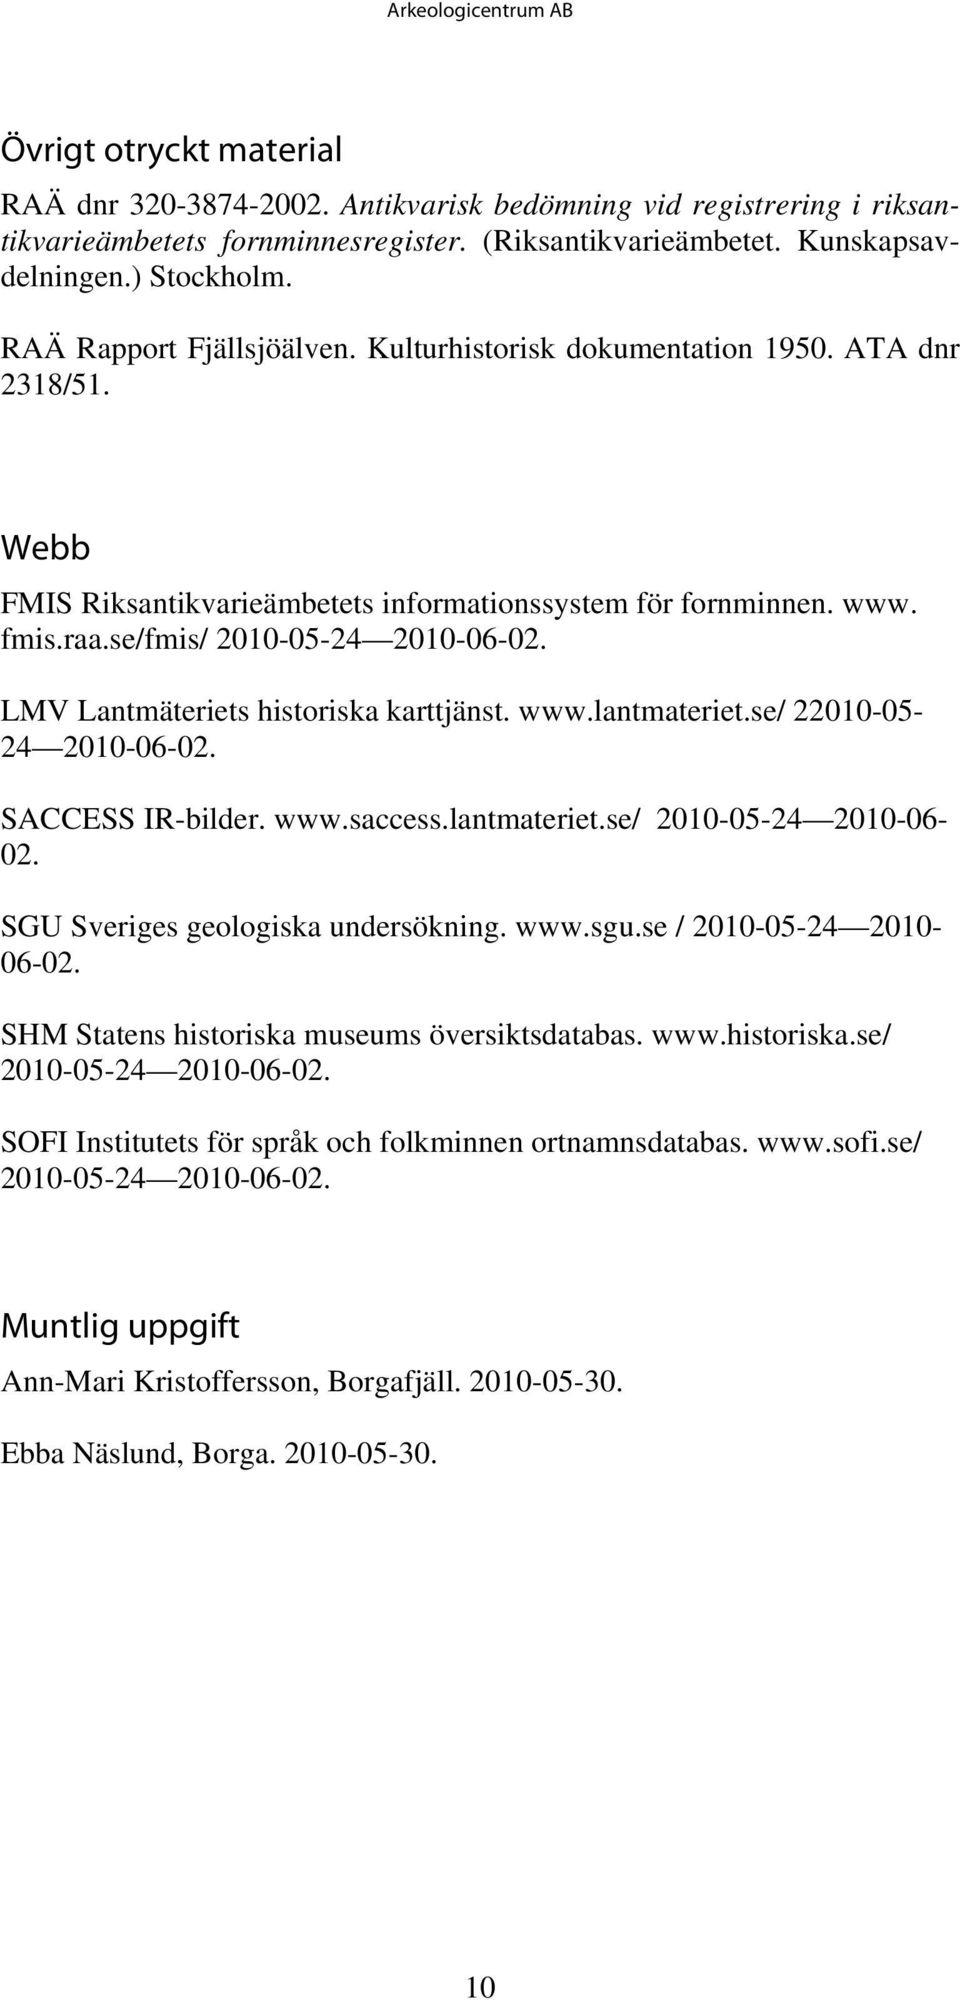 LMV Lantmäteriets historiska karttjänst. www.lantmateriet.se/ 22010-05- 24 2010-06-02. SACCESS IR-bilder. www.saccess.lantmateriet.se/ 2010-05-24 2010-06- 02. SGU Sveriges geologiska undersökning.